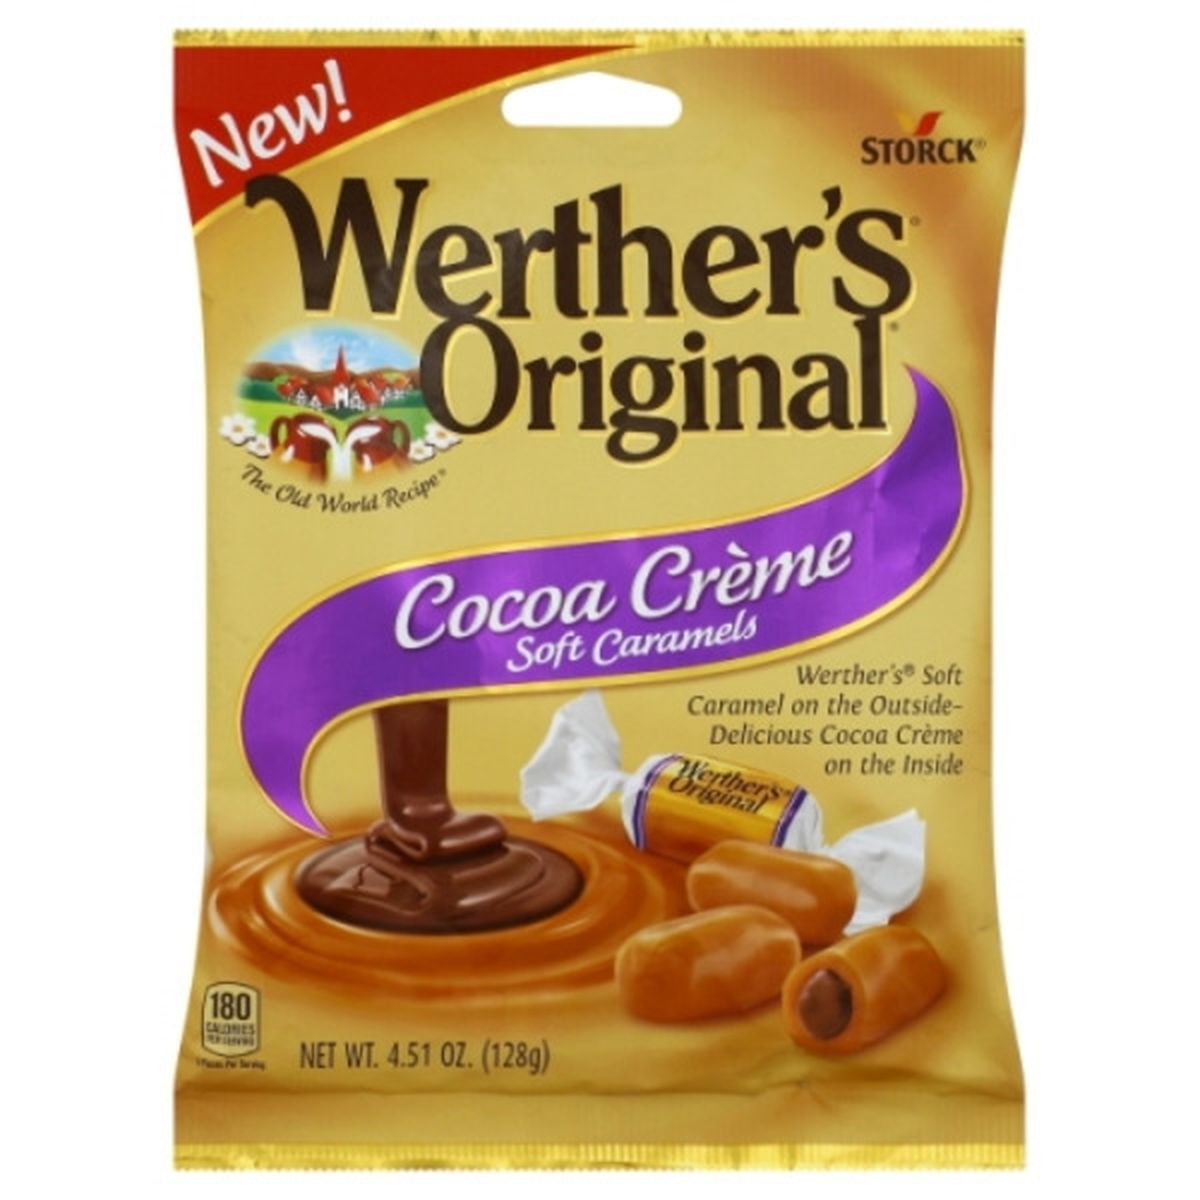 Calories in Werther's Original Original Caramels, Soft, Cocoa Creme